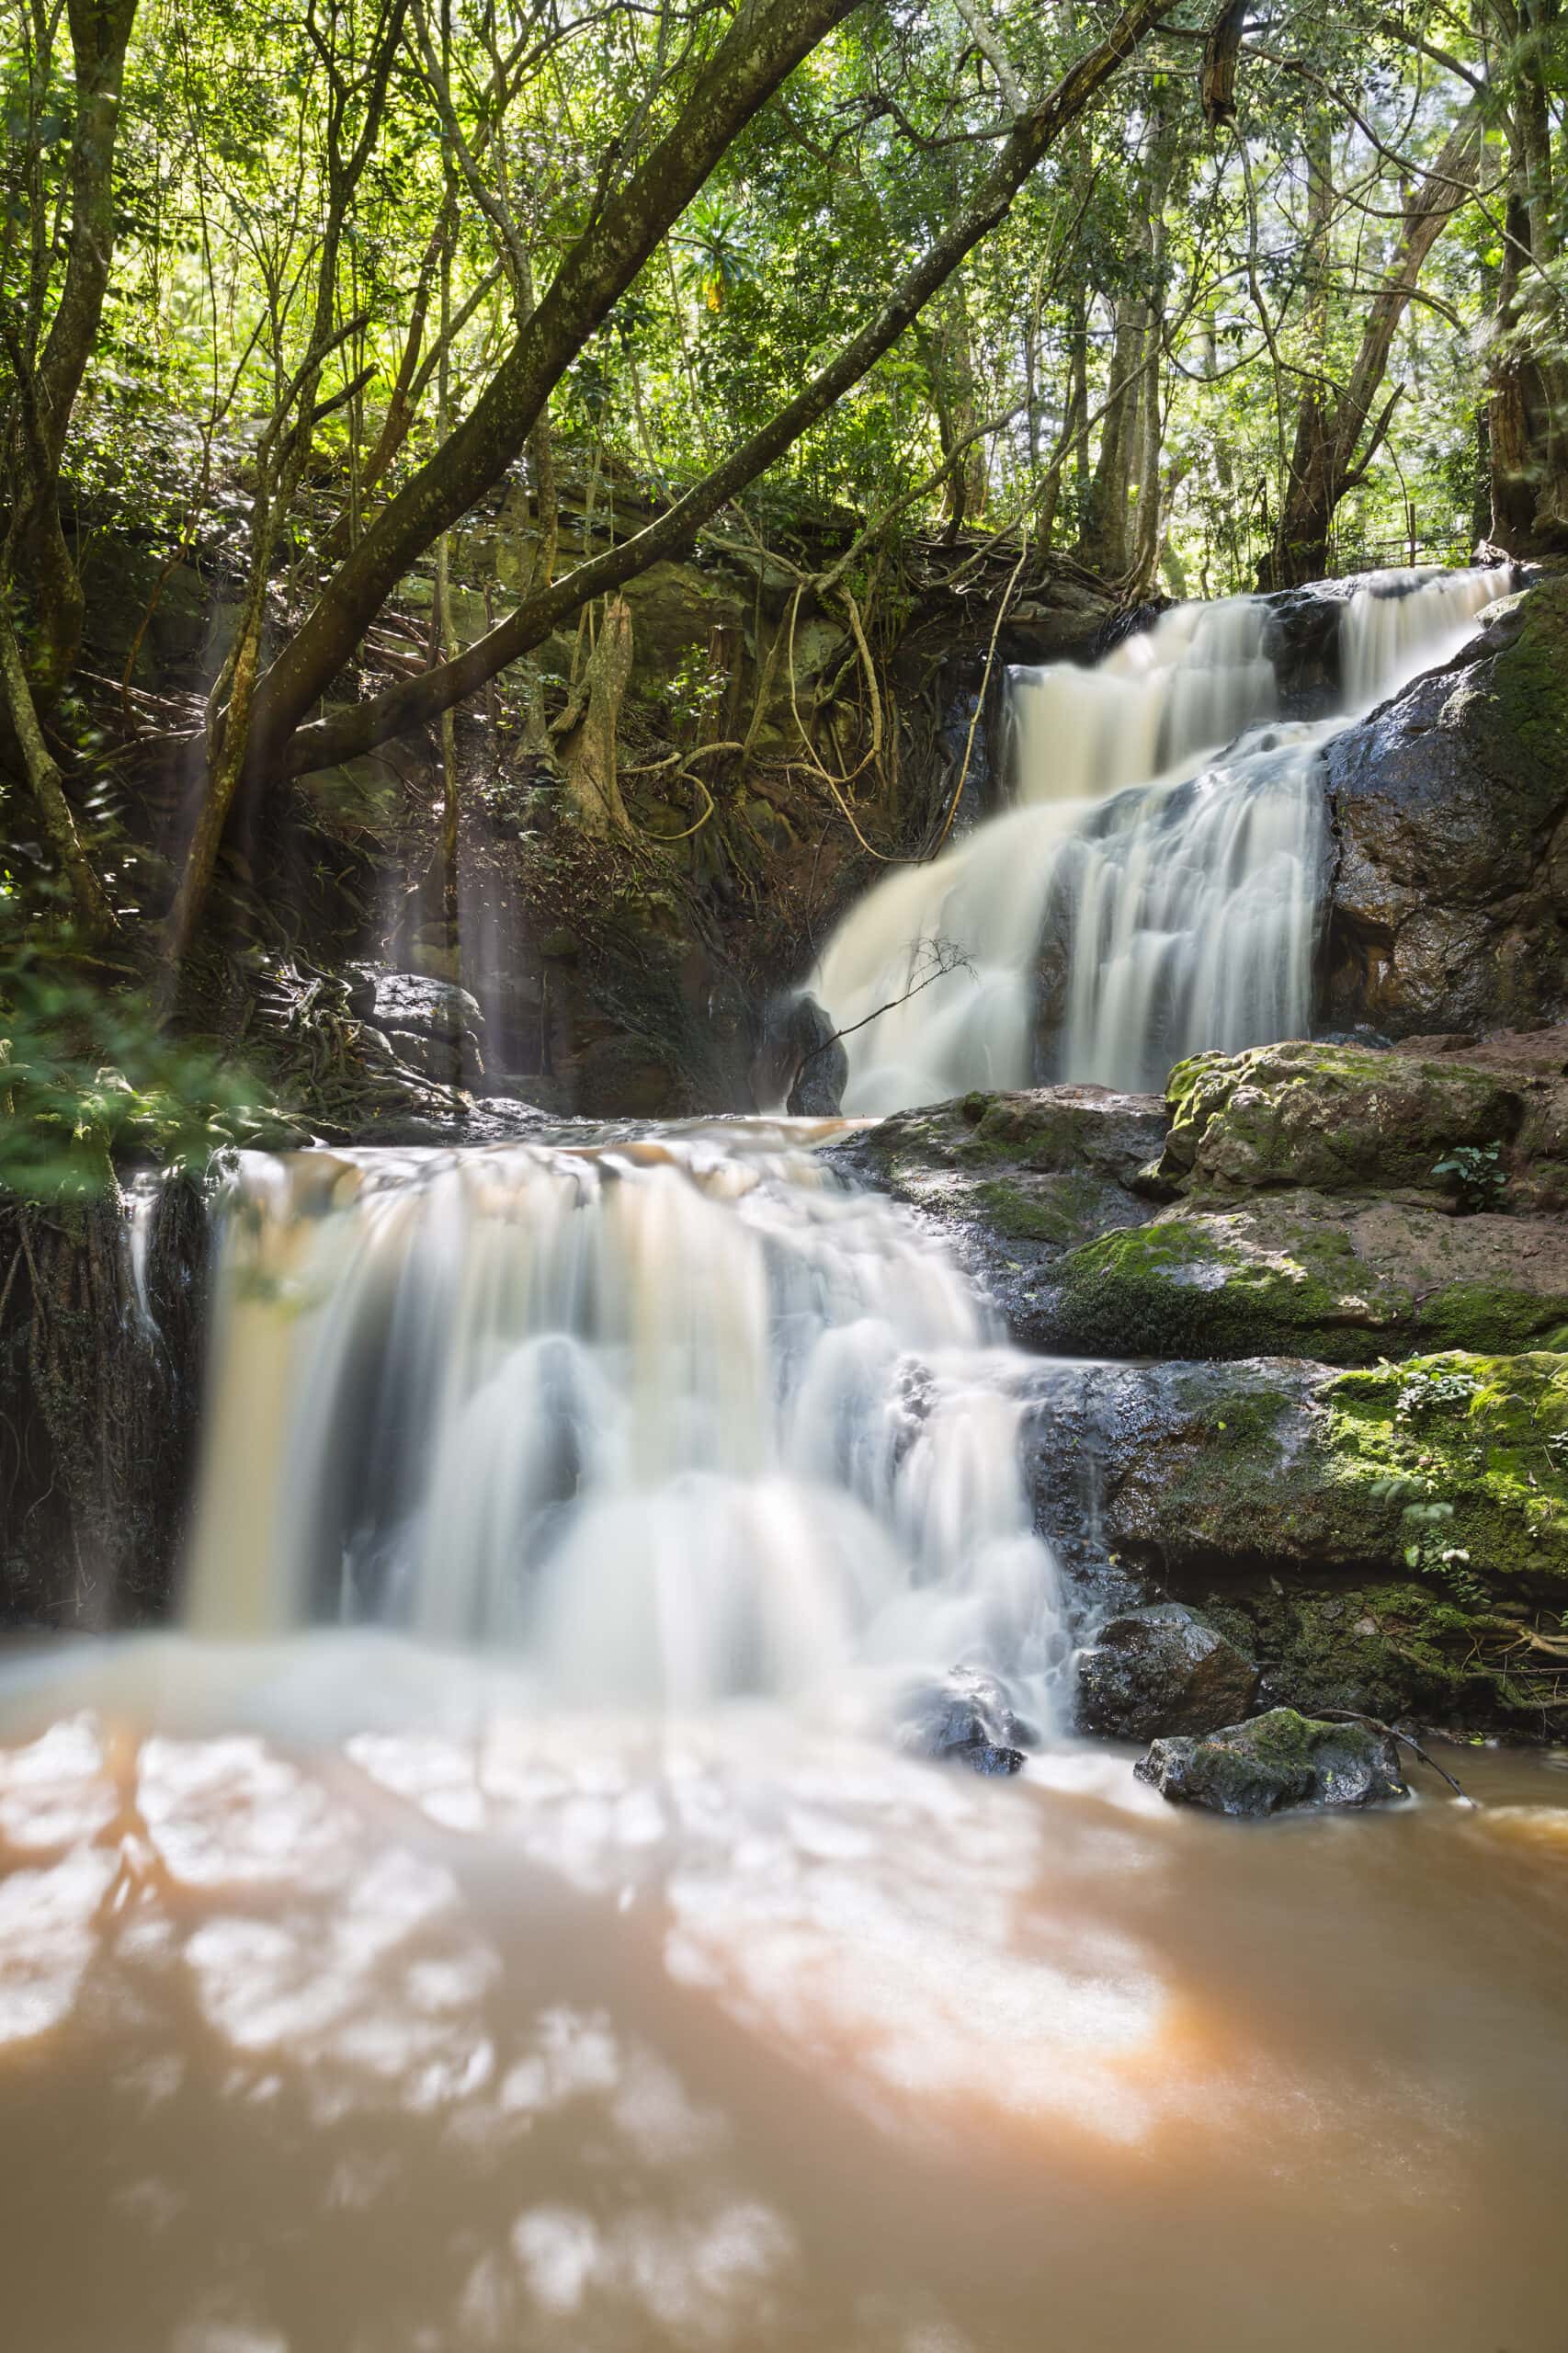 karura forest waterfall in nairobi kenya 2021 08 26 17 00 35 utc scaled